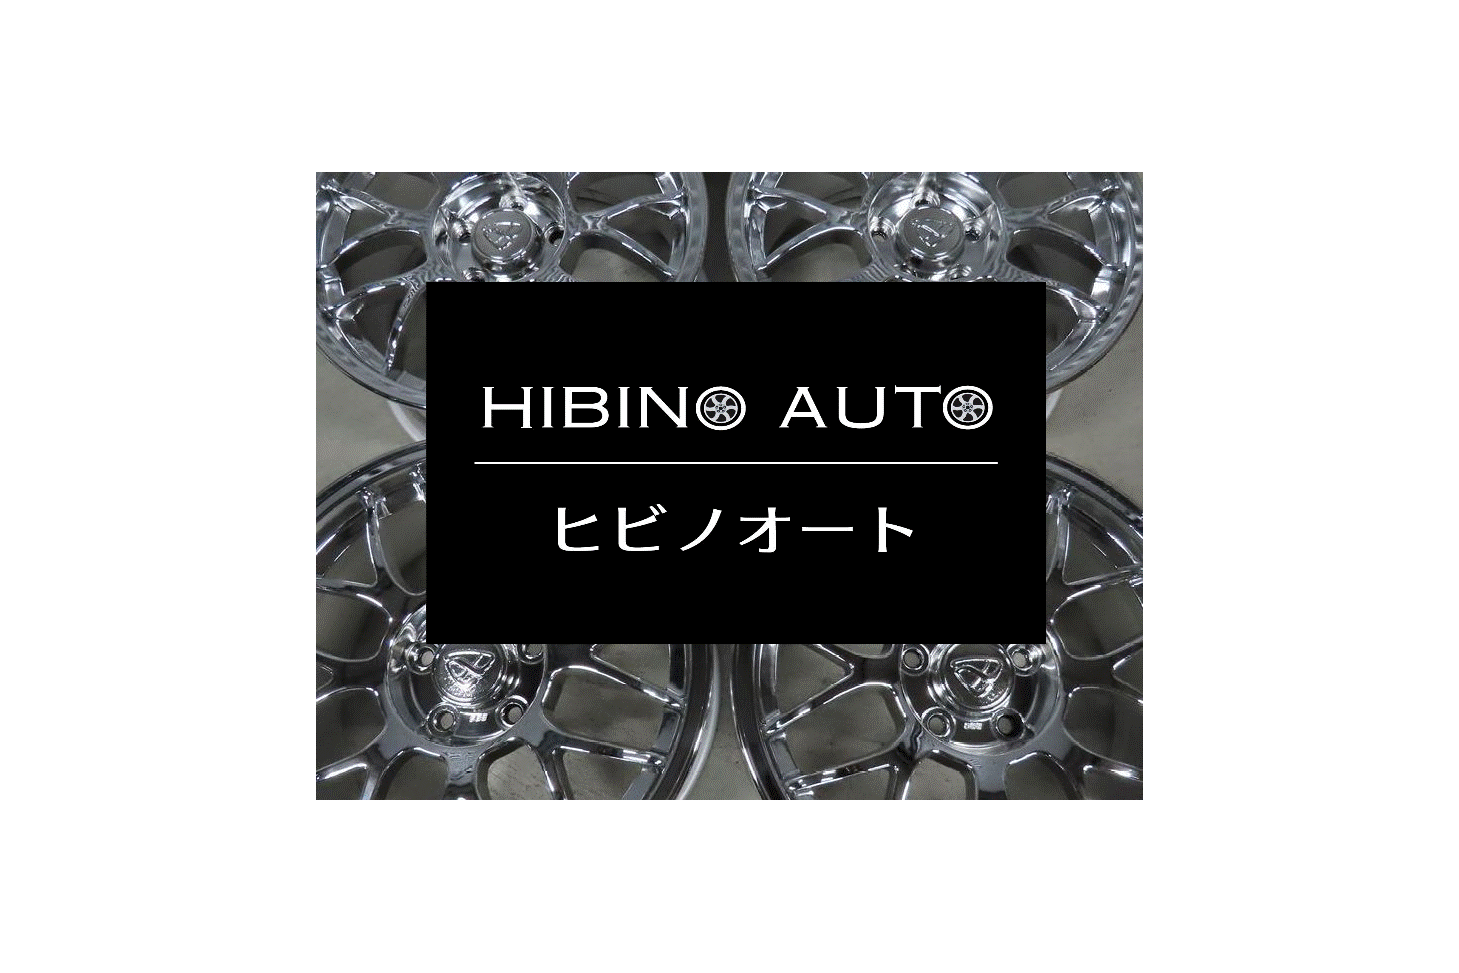 Hibinoauto LLC